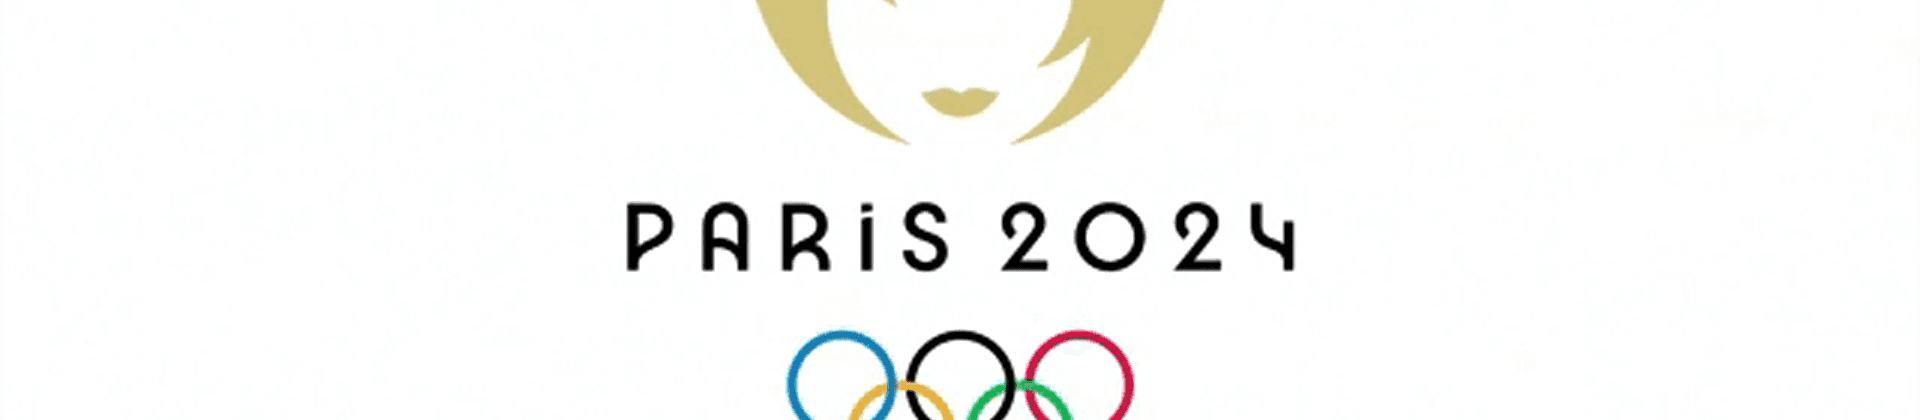 Paris issues Digital visas ahead of 2024 Olympics